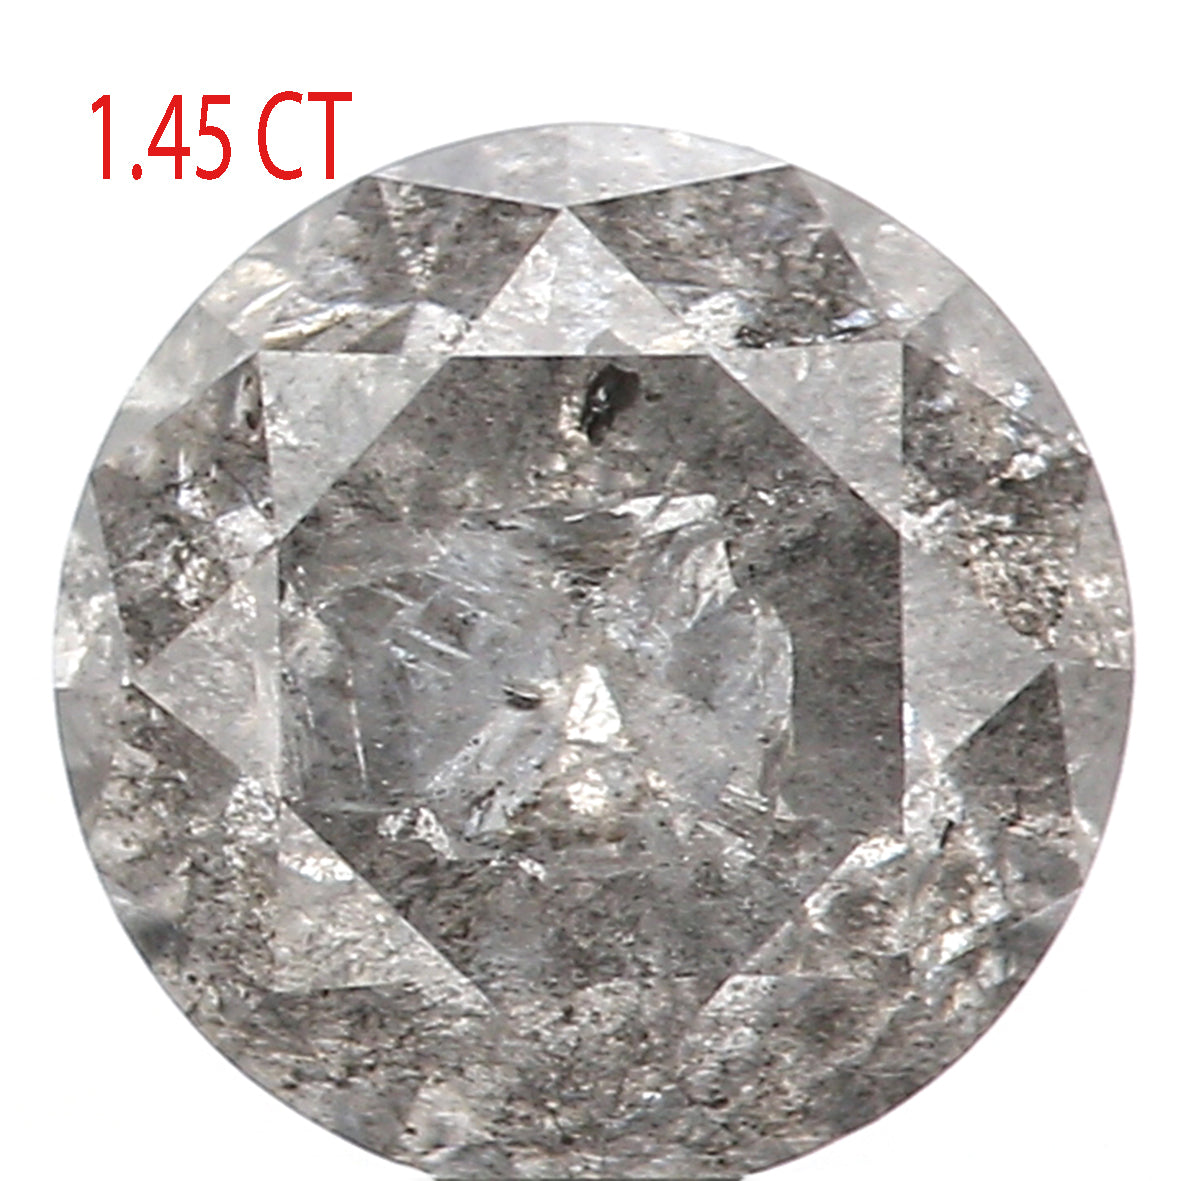 1.45 CT Natural Loose Round Shape Diamond Black Grey Color Round Shape Diamond 6.70 MM Salt And Pepper Round Brilliant Cut Diamond QL013